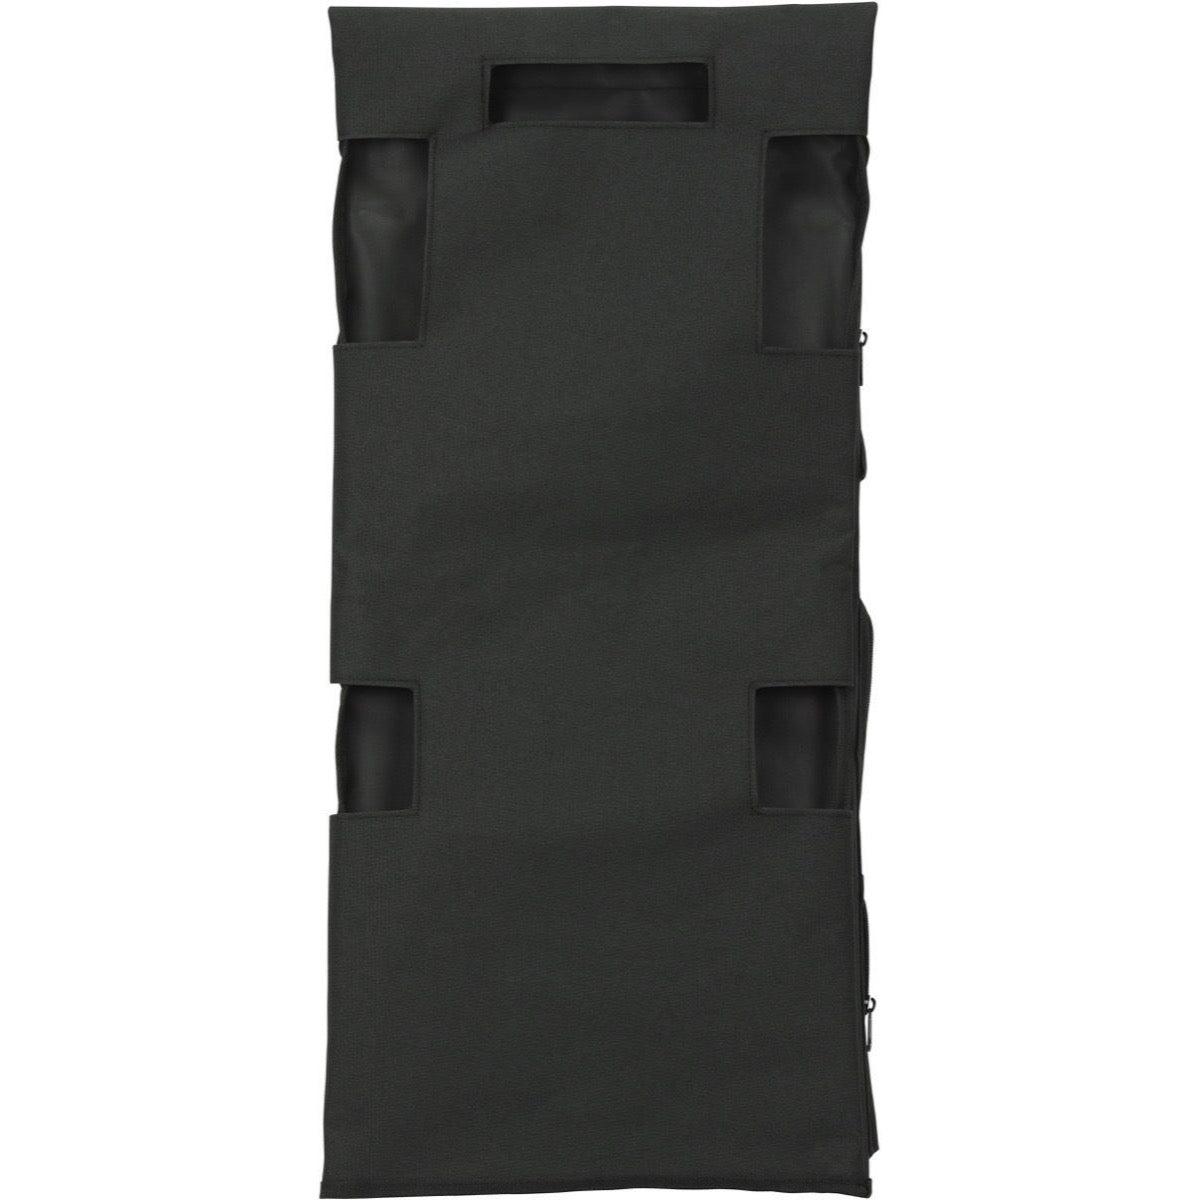 RocknRoller Tool/Accessory Bag, RSA-TAB14, Large